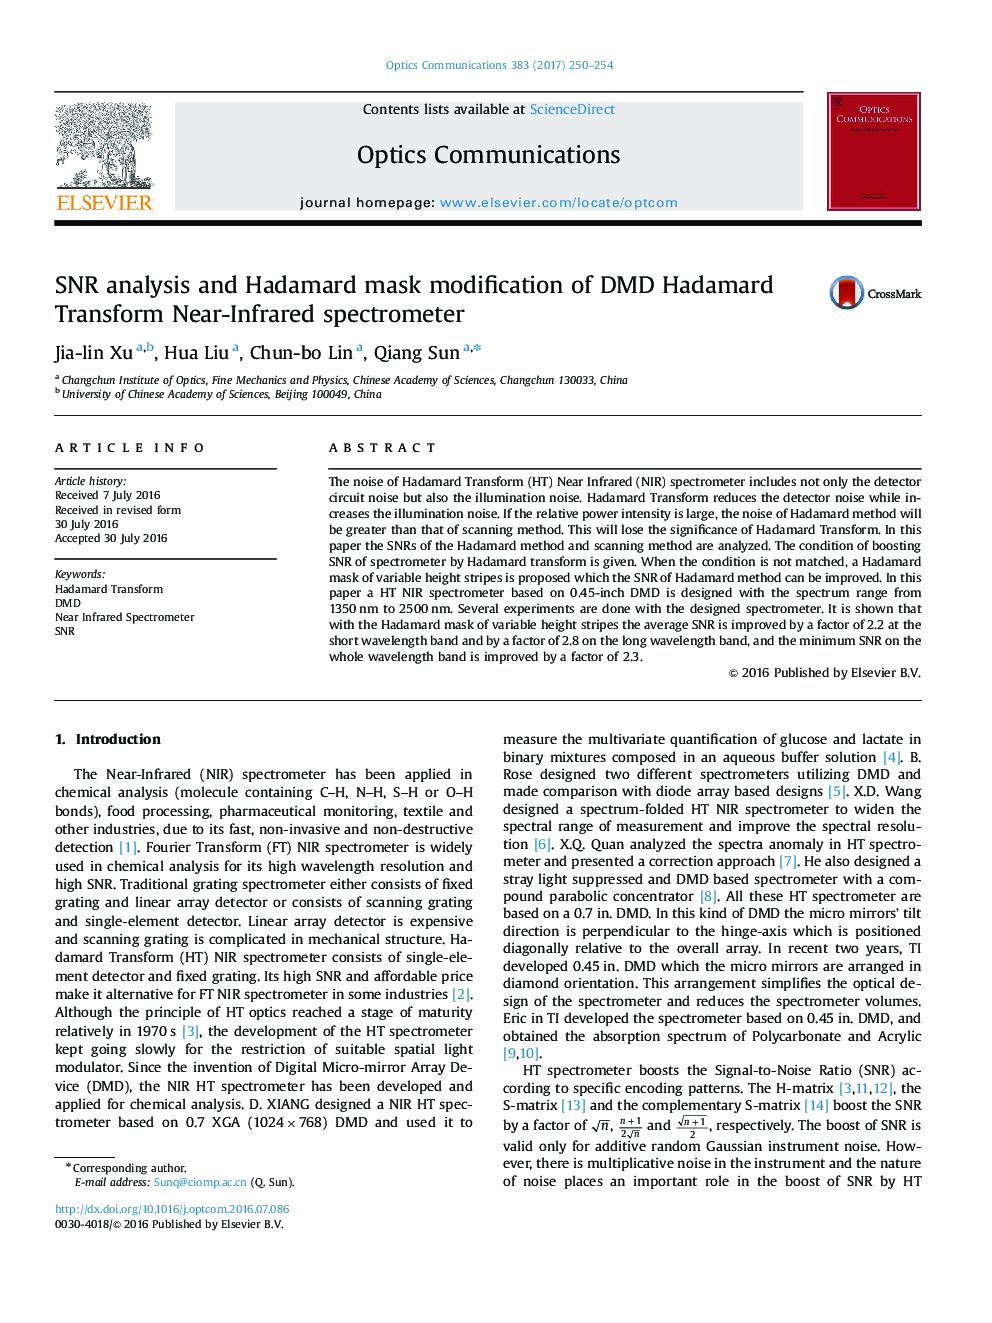 SNR analysis and Hadamard mask modification of DMD Hadamard Transform Near-Infrared spectrometer